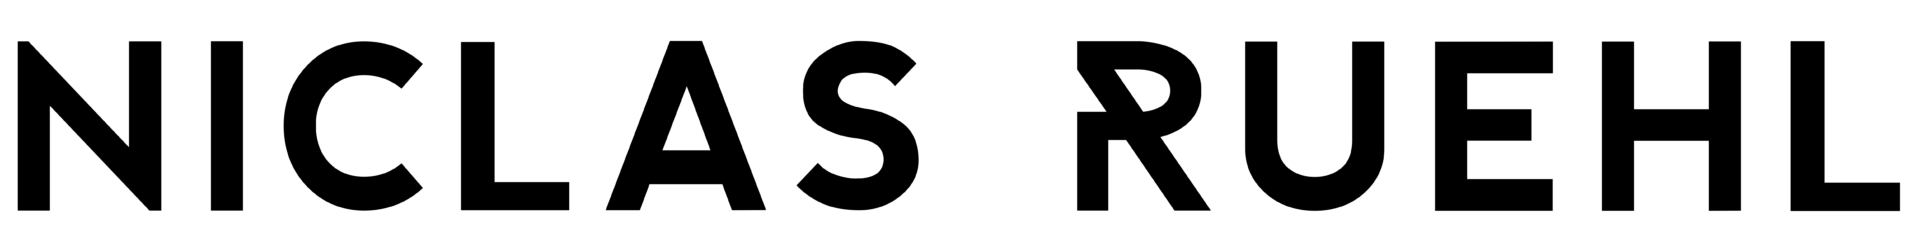 Logo Name NR_black